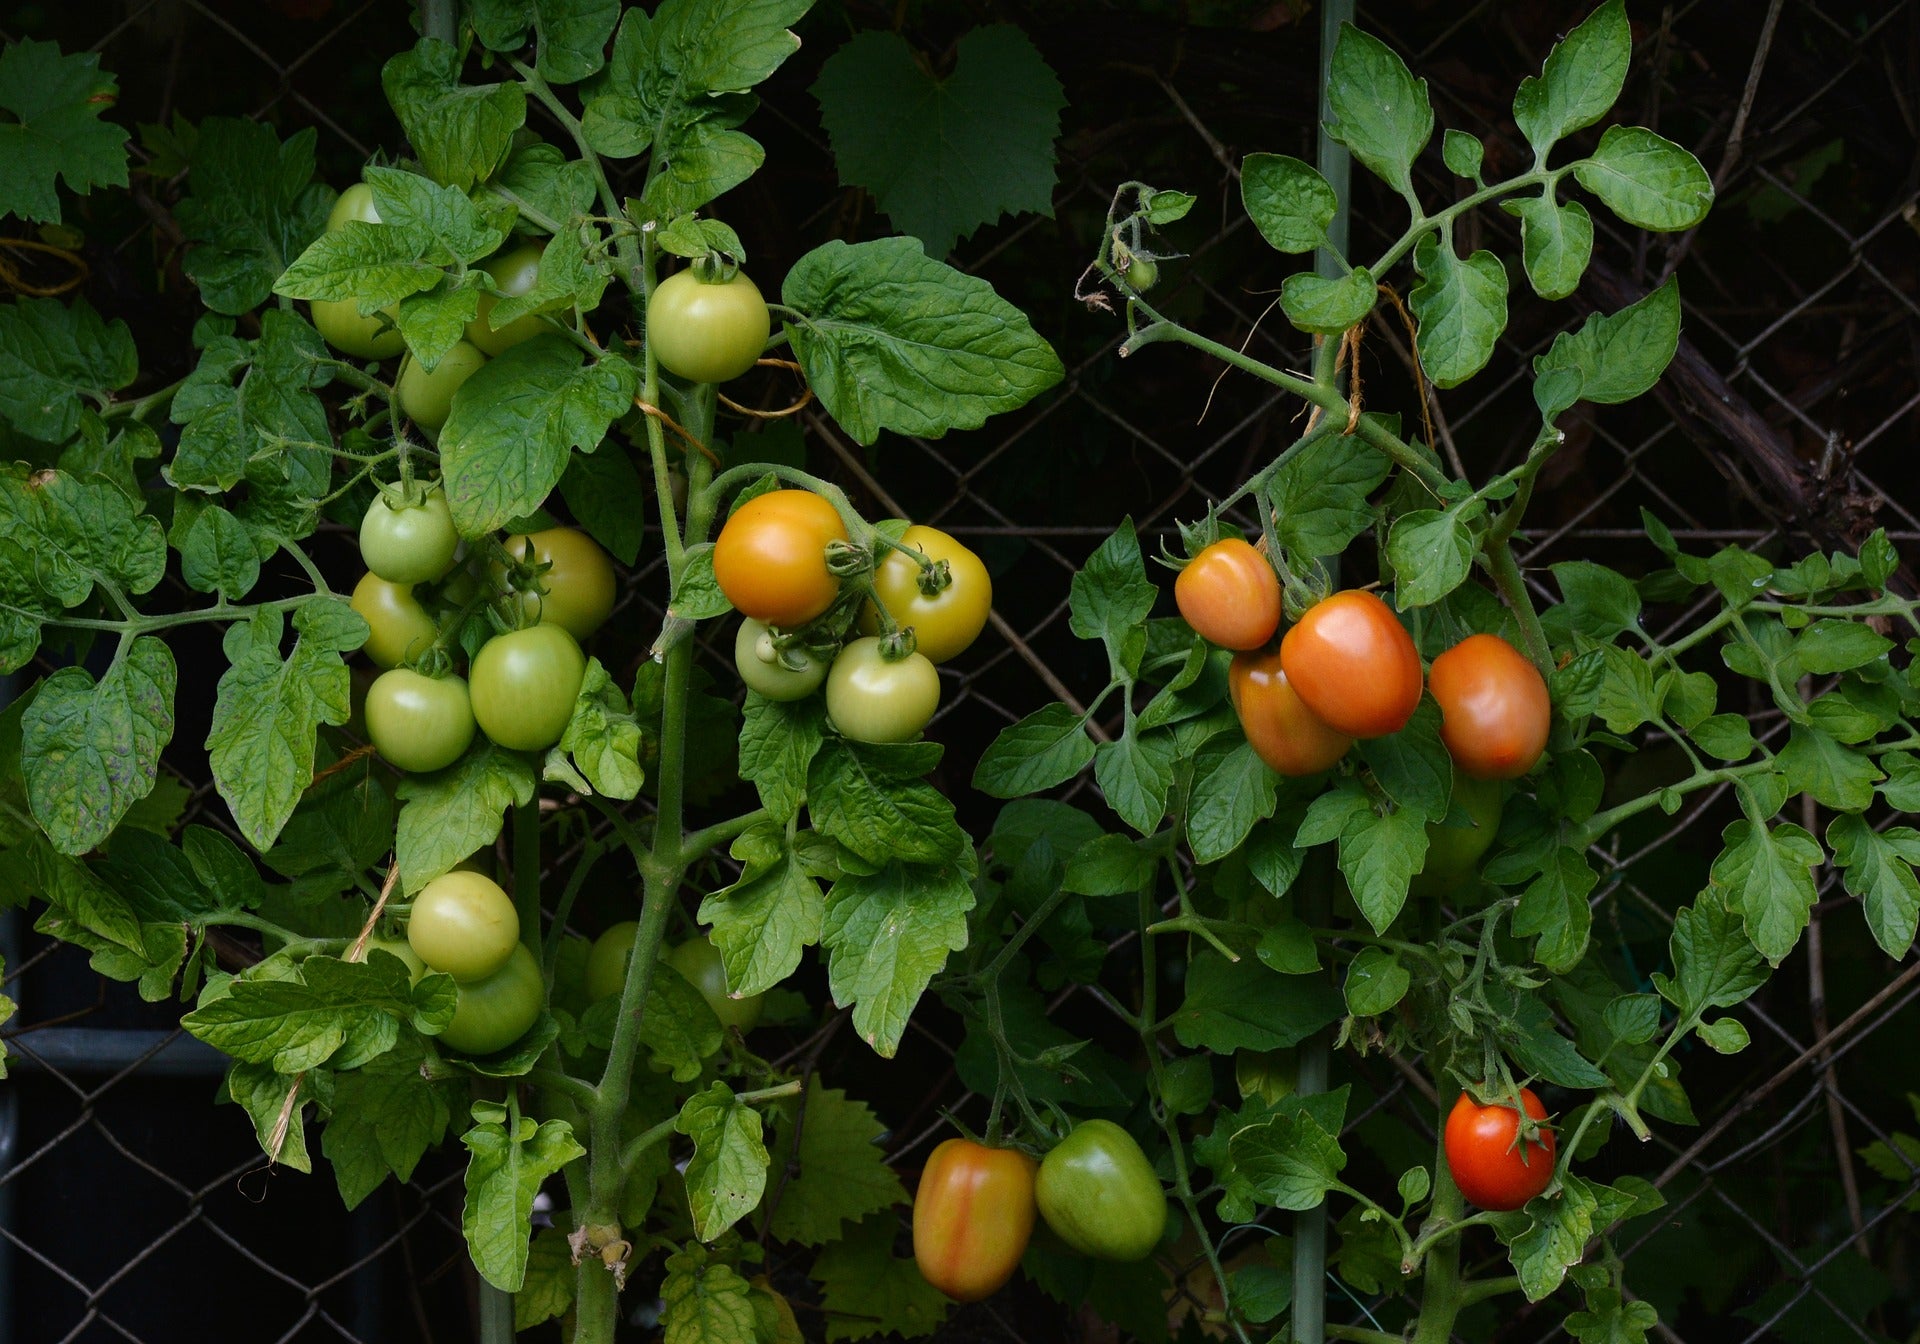 Bush Tomatoes Seeds